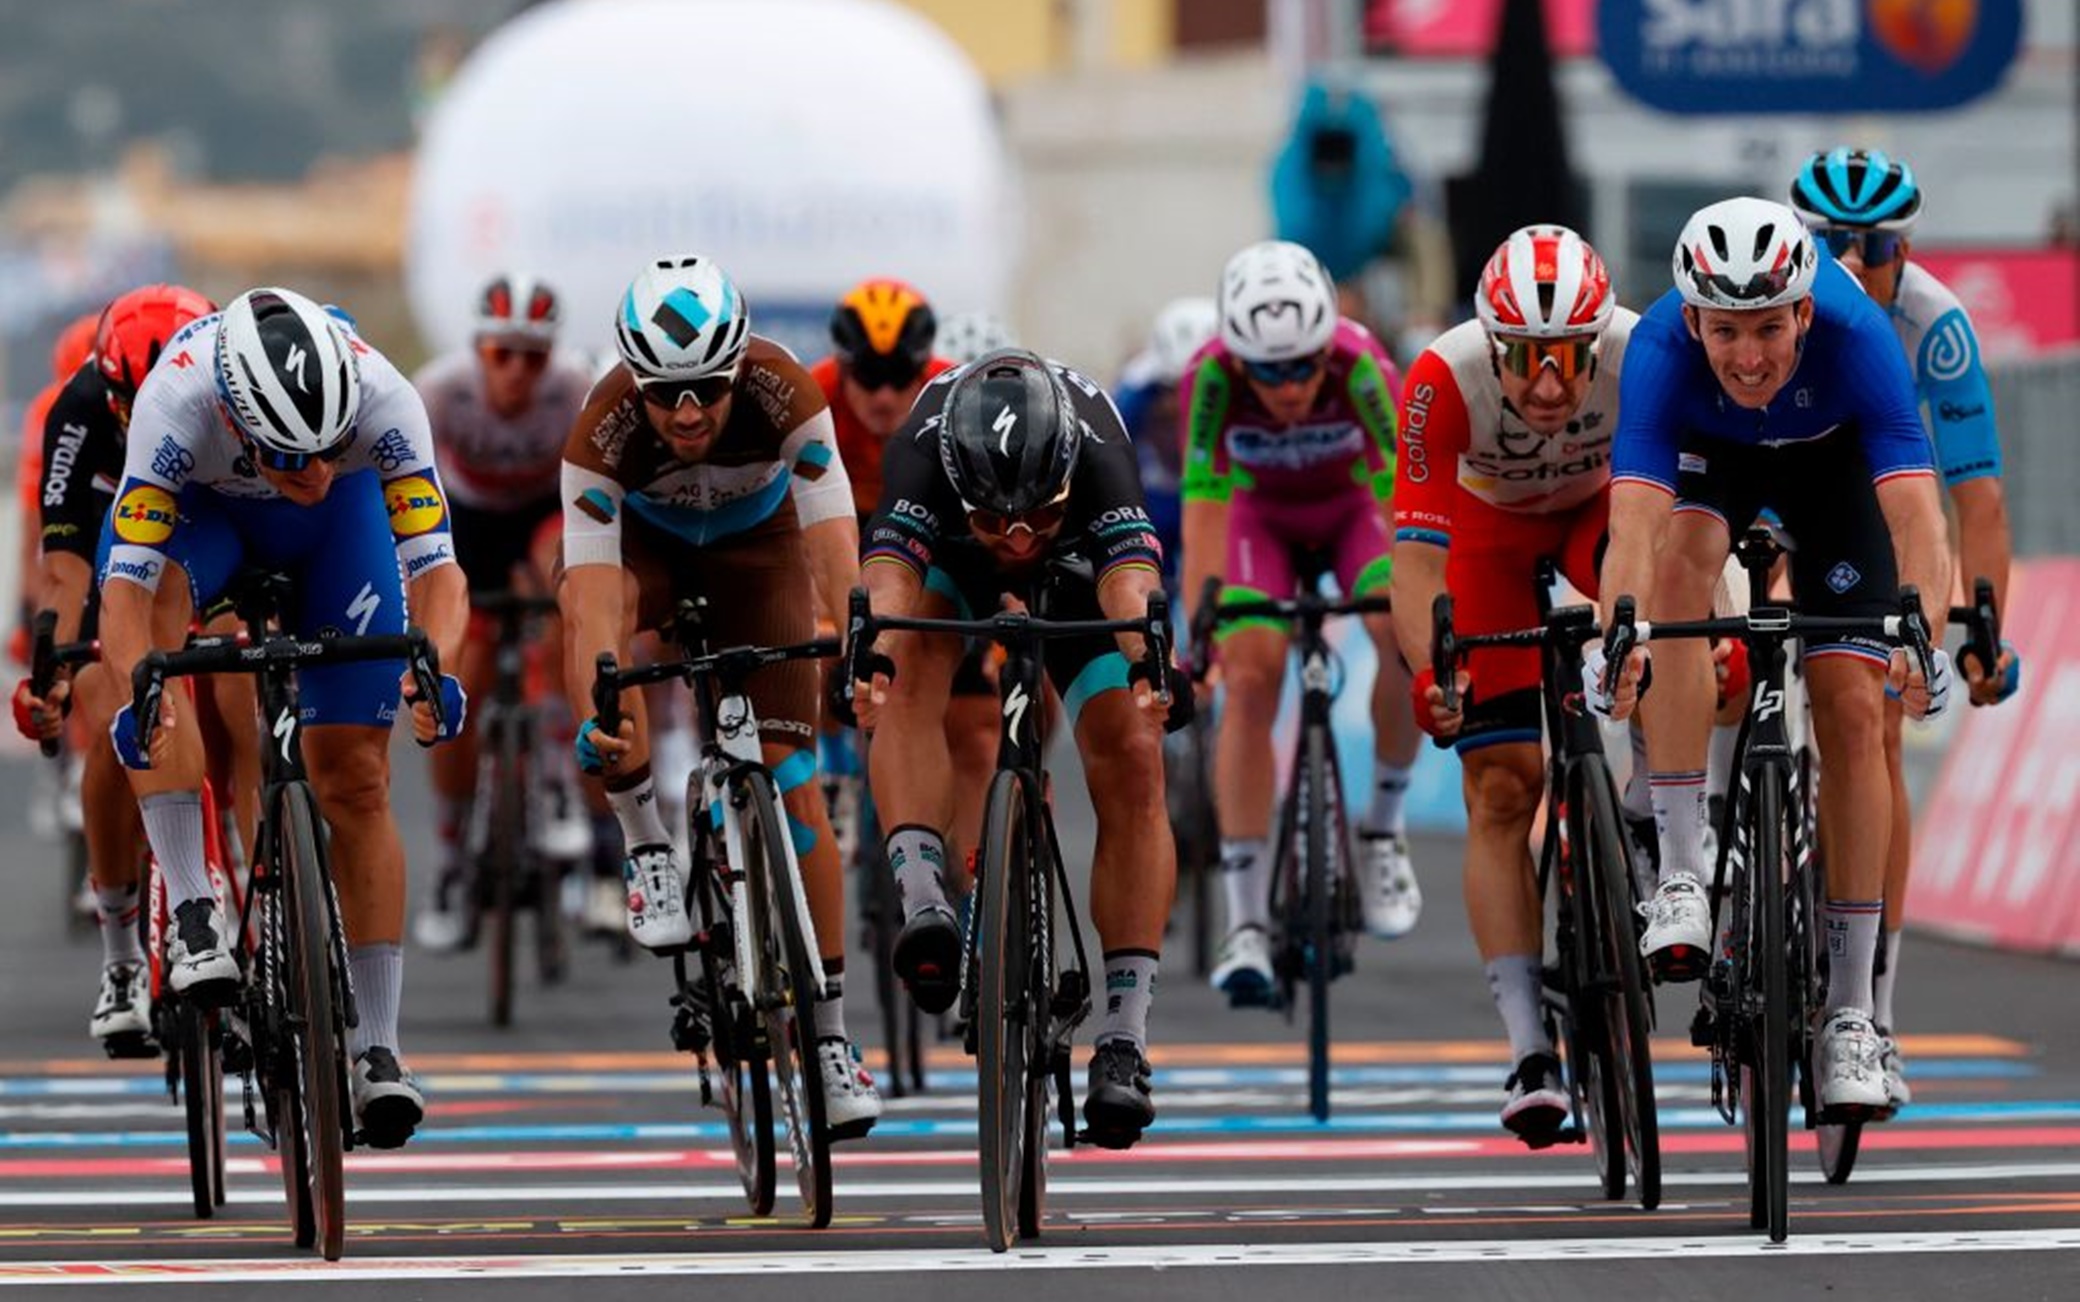 Giro D'italia Riders reveal who they think will win the Giro d'Italia